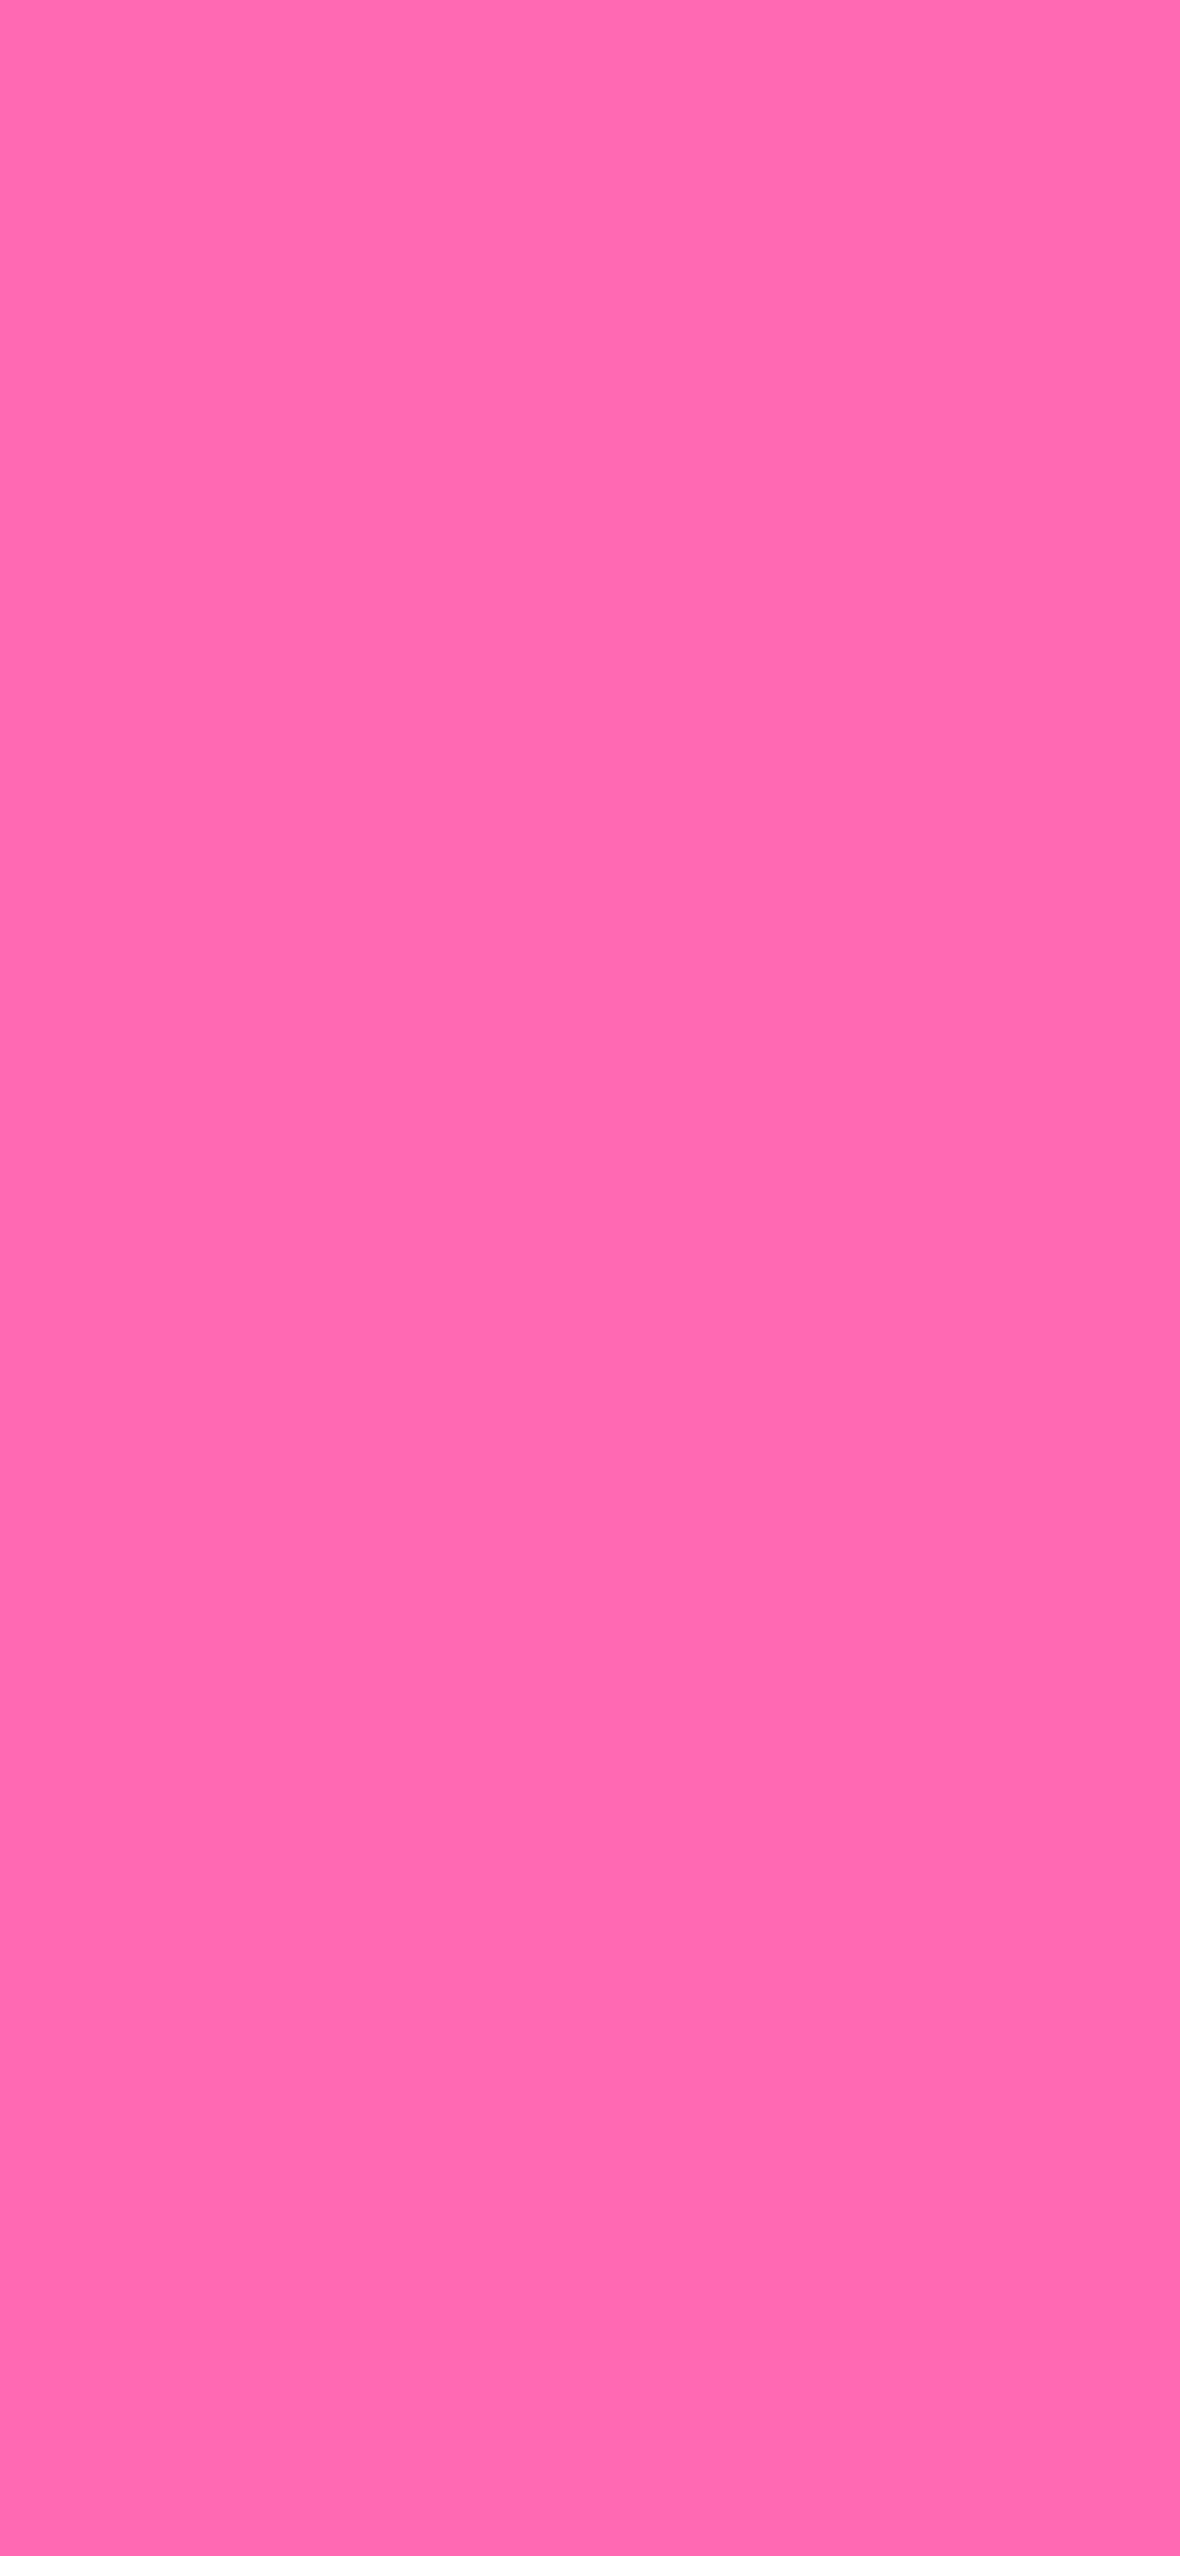 Solid Pink Home Screen Wallpaper